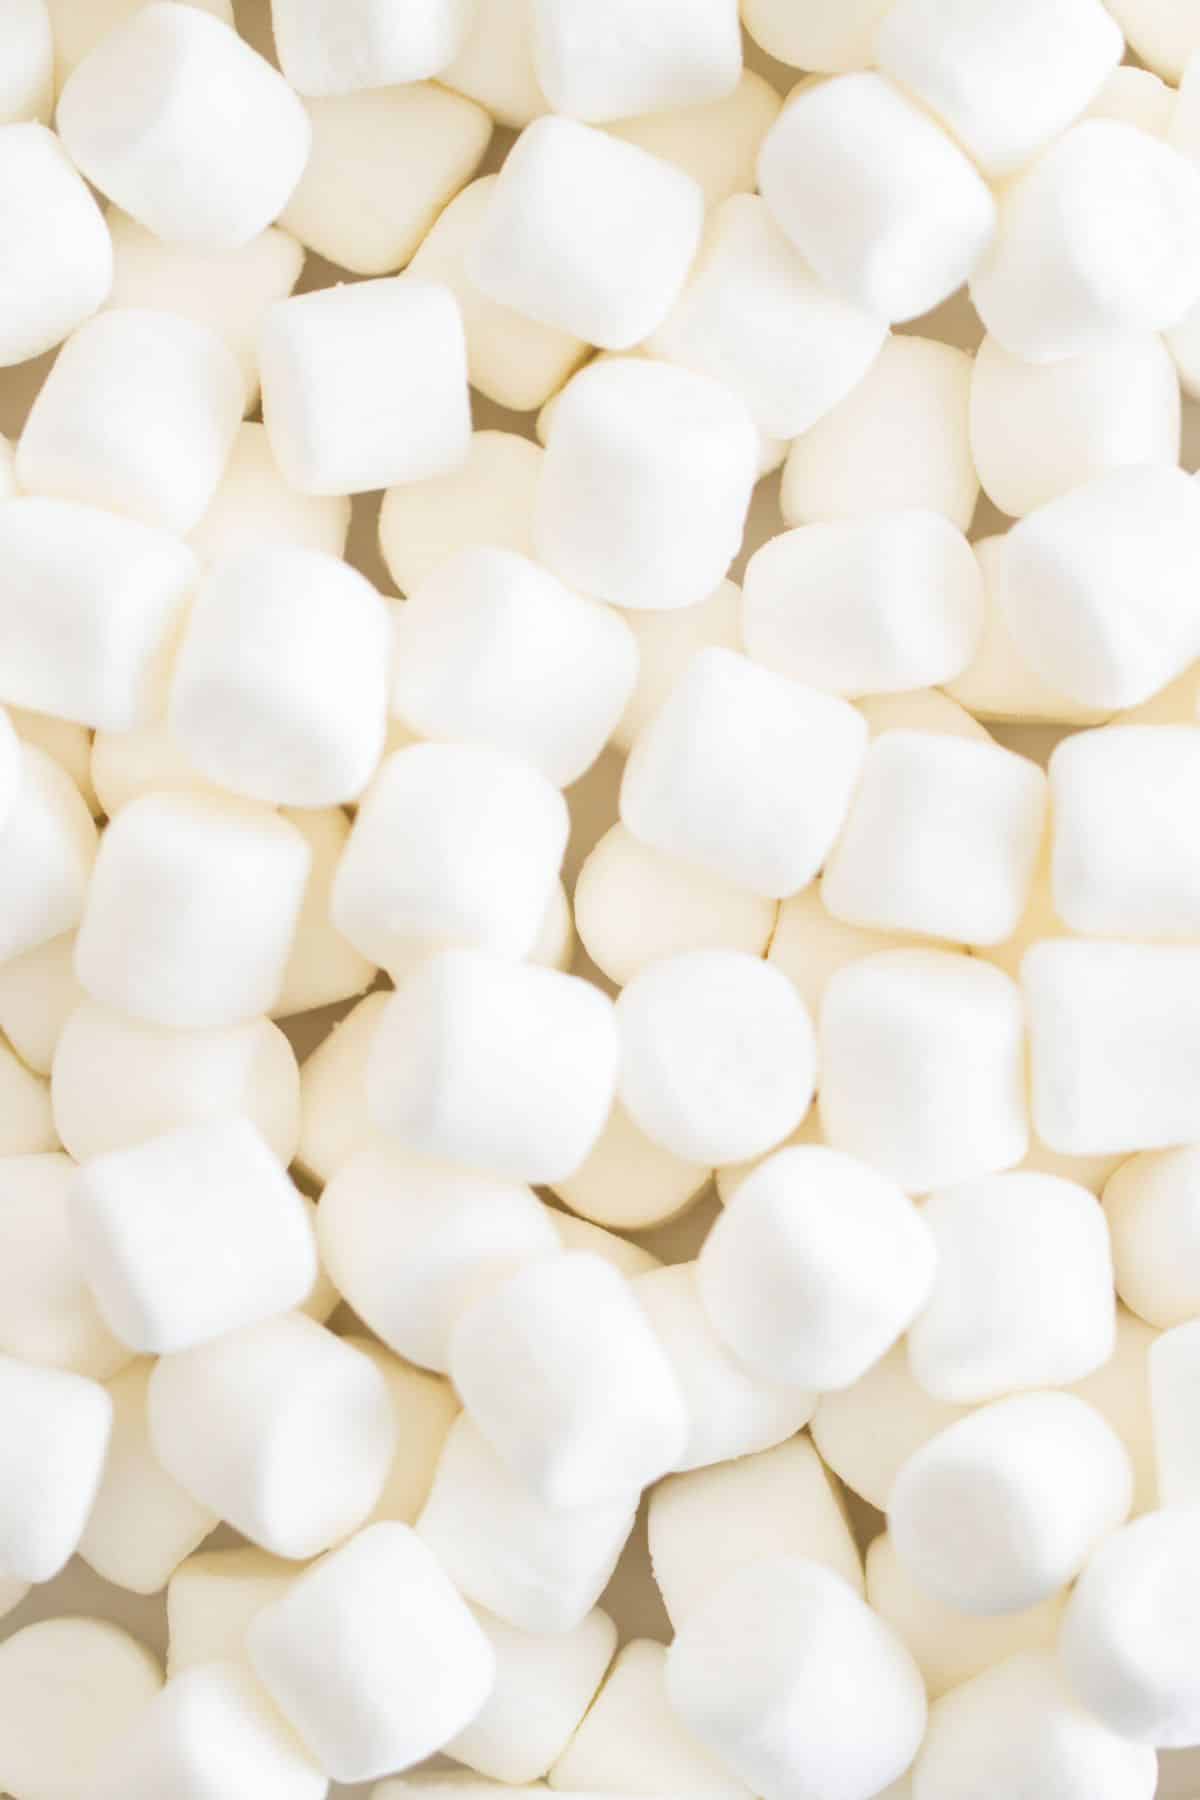 a close-up of mini marshmallows.